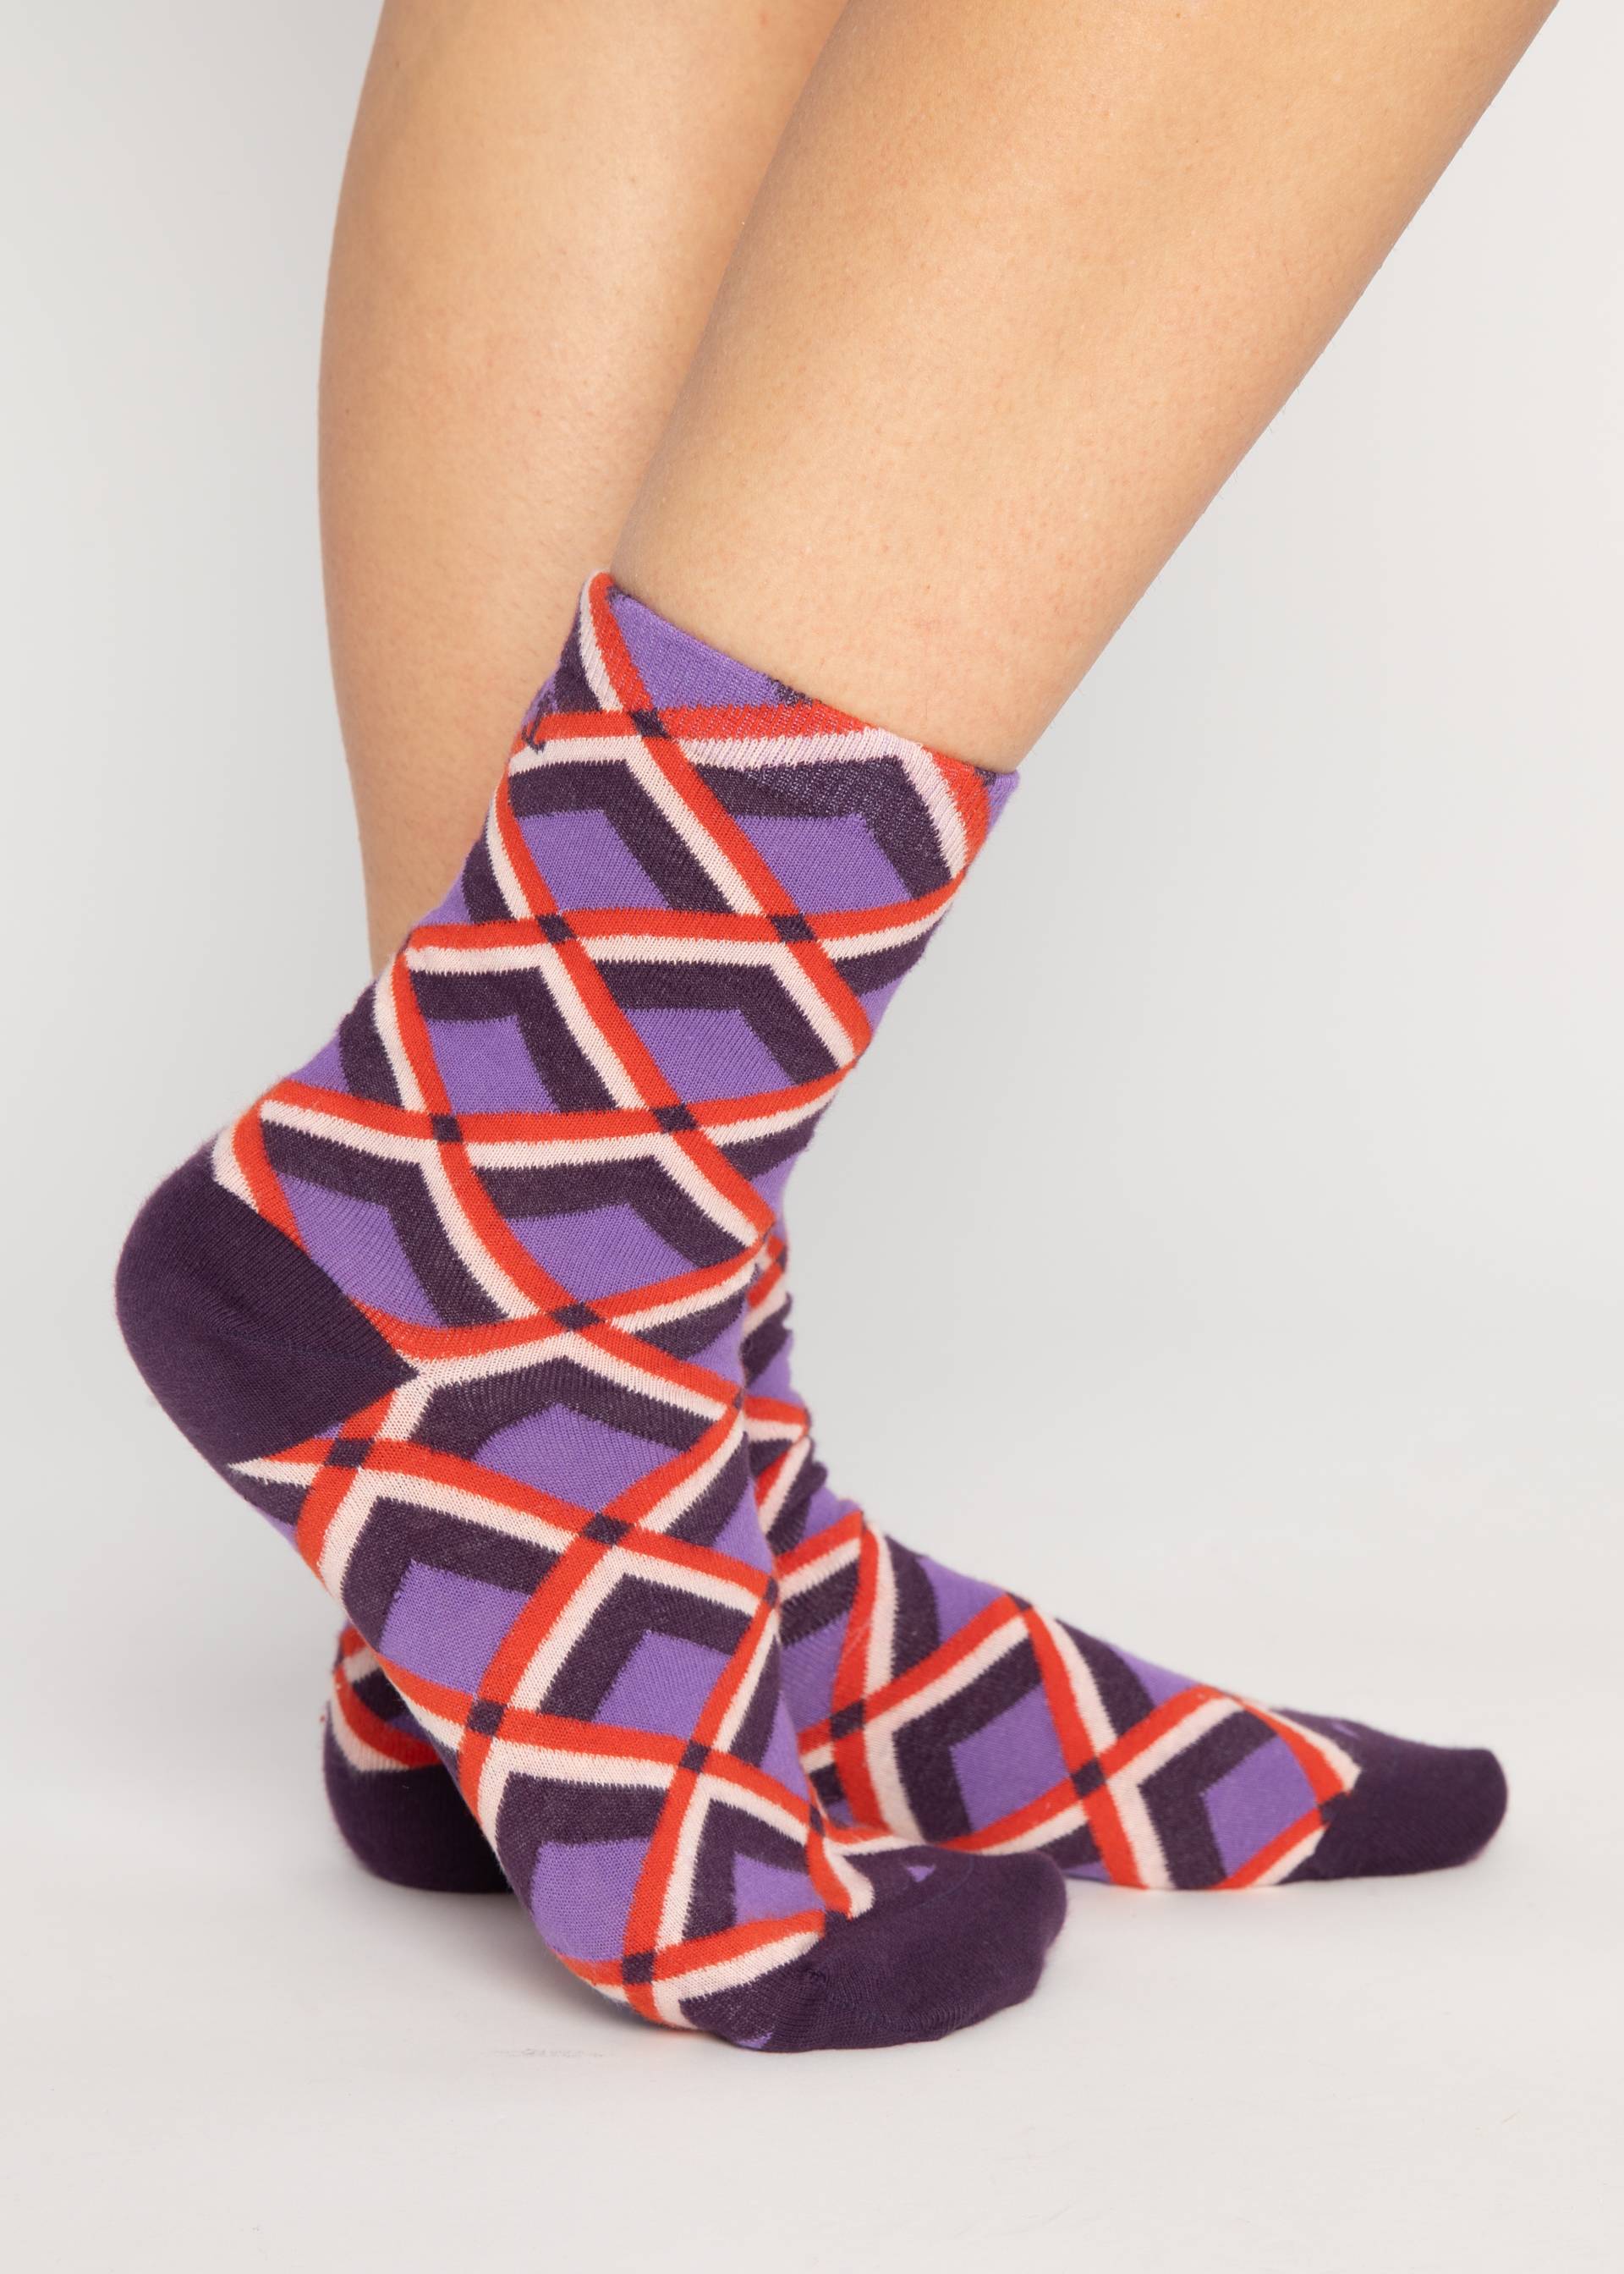 Cotton socks Sensational Steps, my friendly socks, Socks, Purple